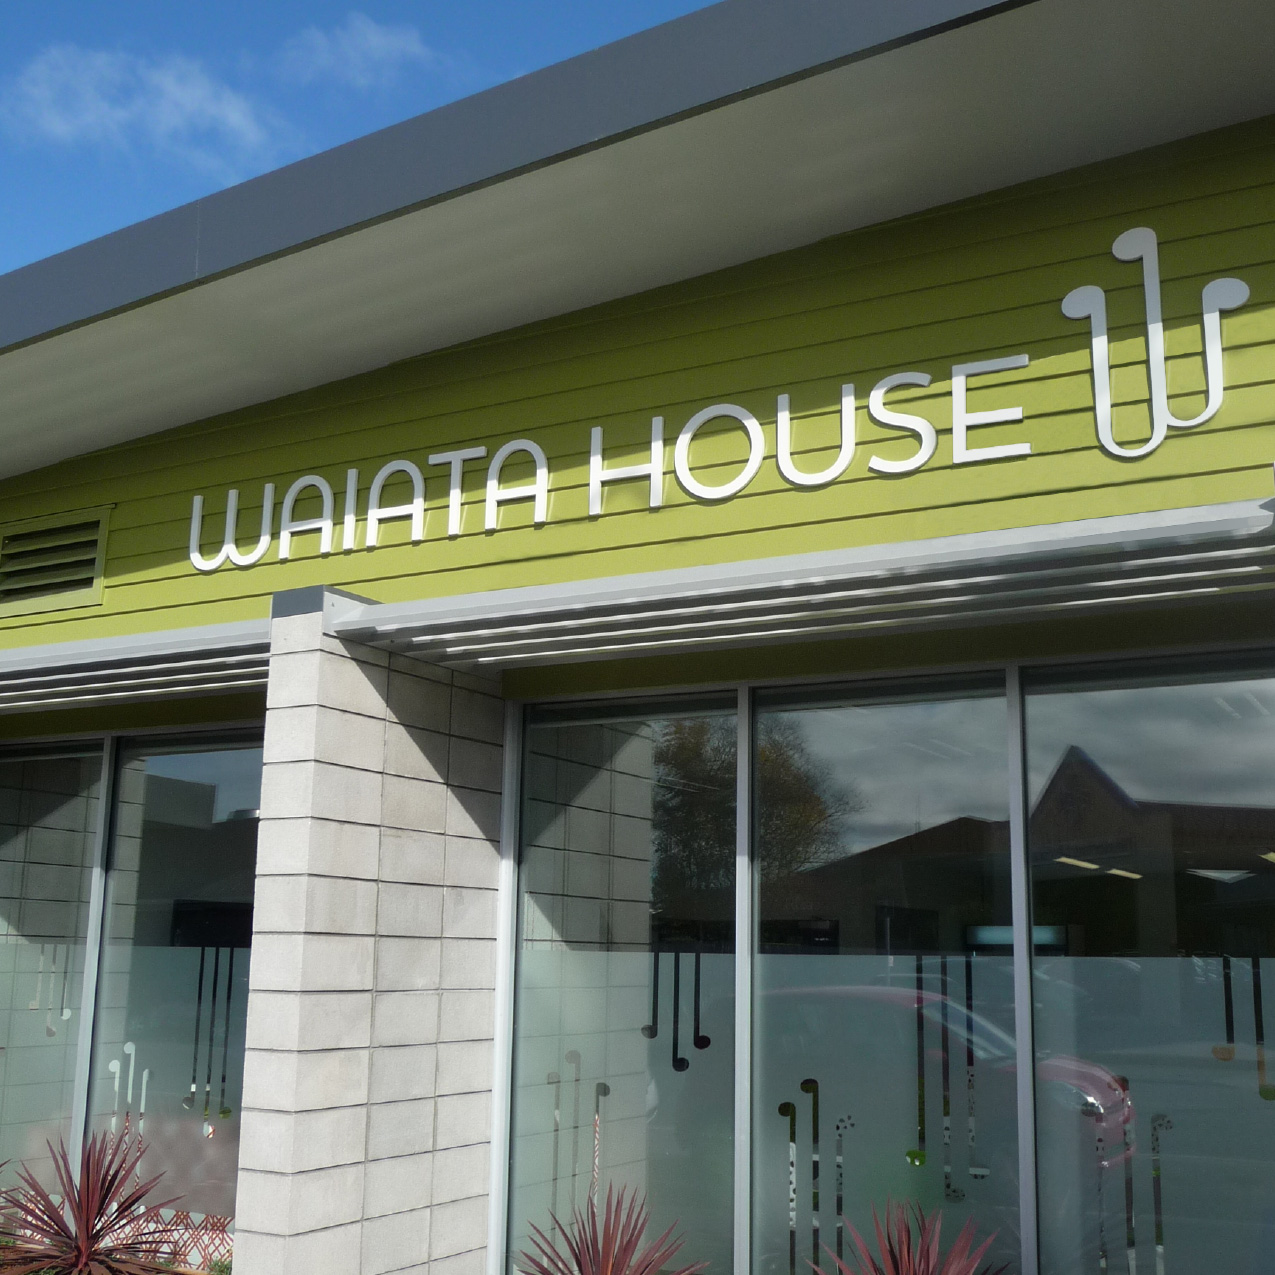 Waiata House